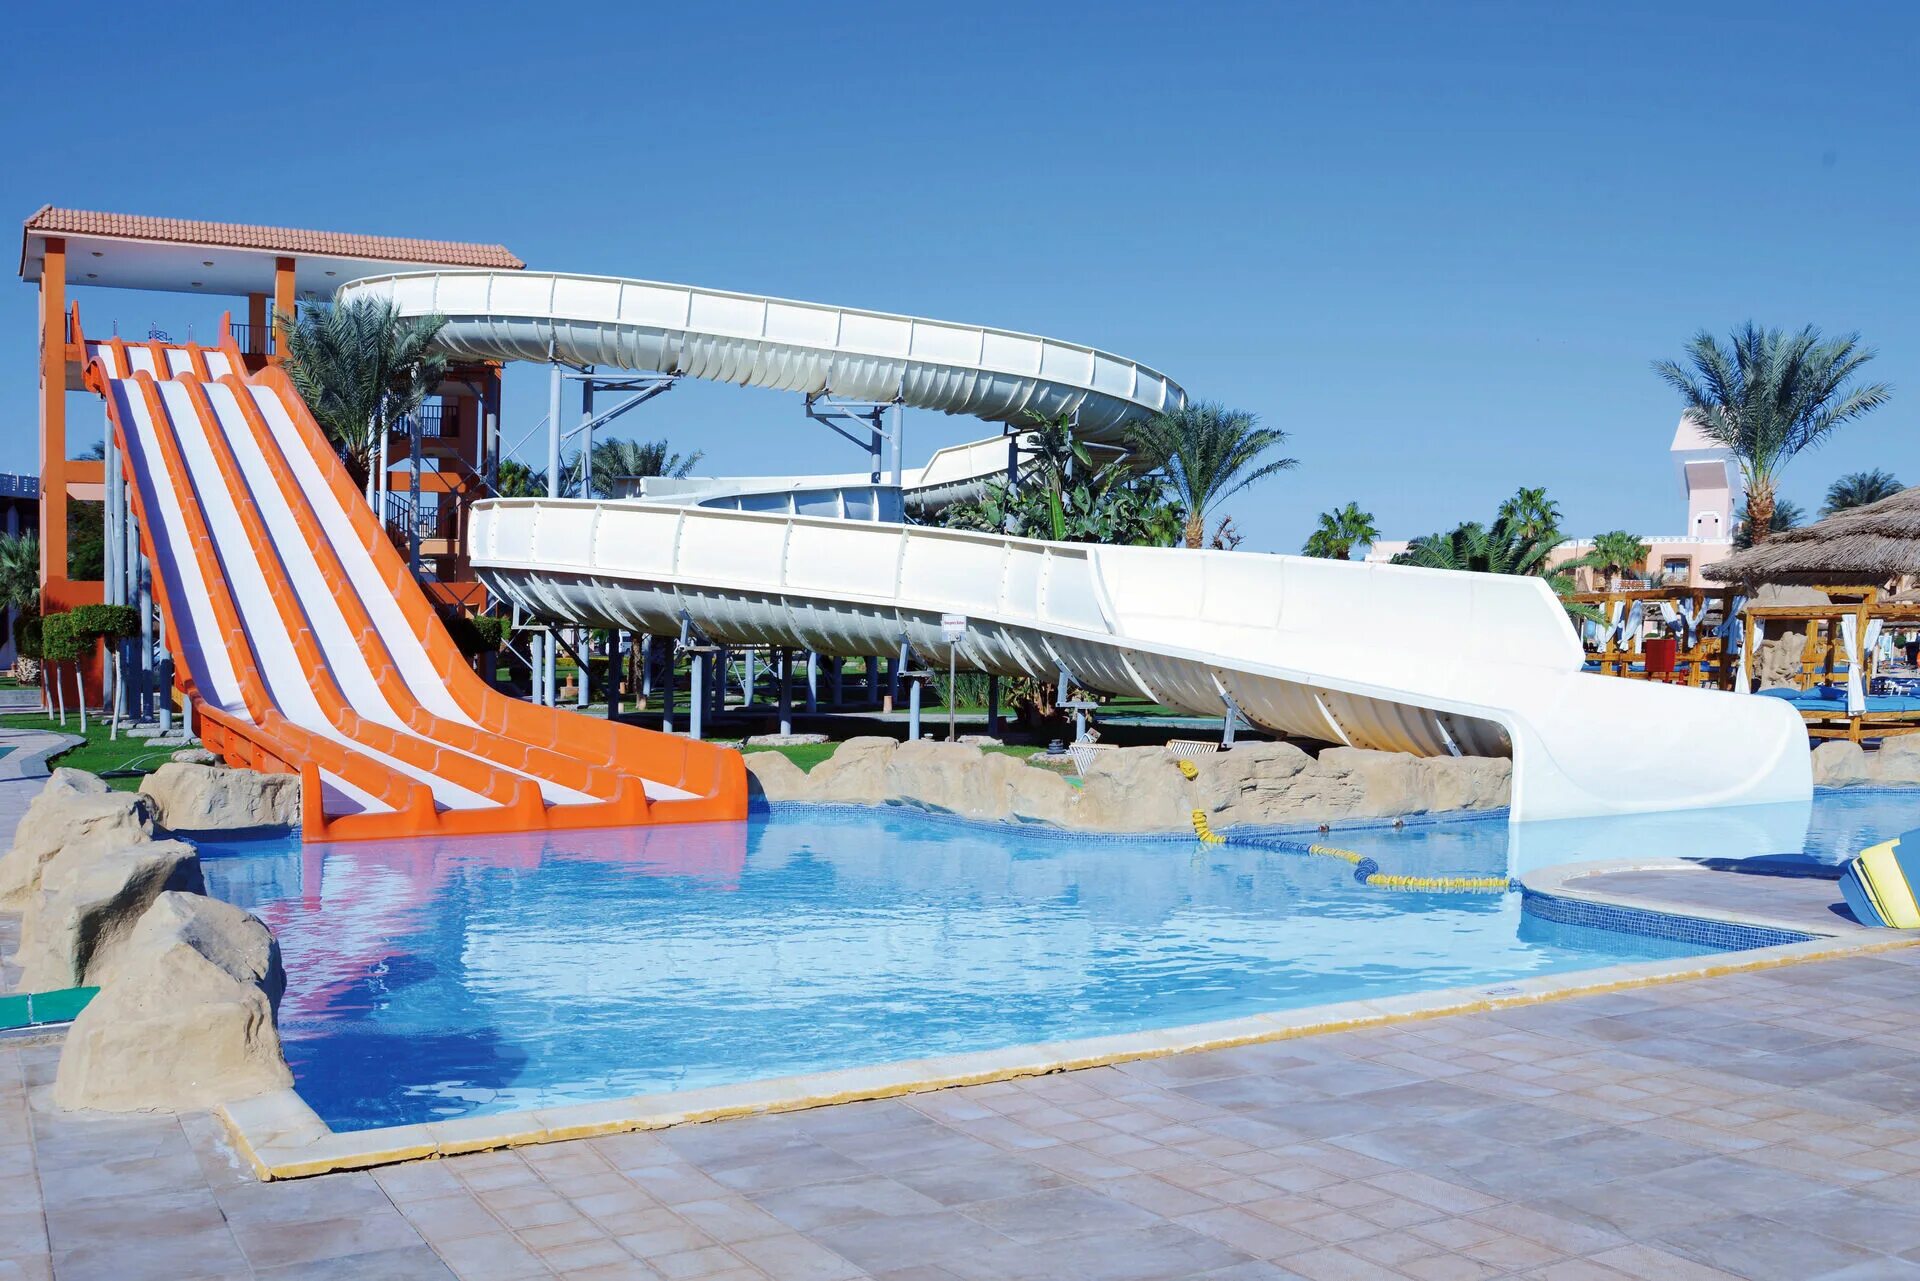 Отель Beach Albatros Resort 4. Бич Альбатрос Резорт Хургада 4. Beach Albatros Resort Hurghada.аквапарк. Альбатрос Египет. Билета бич